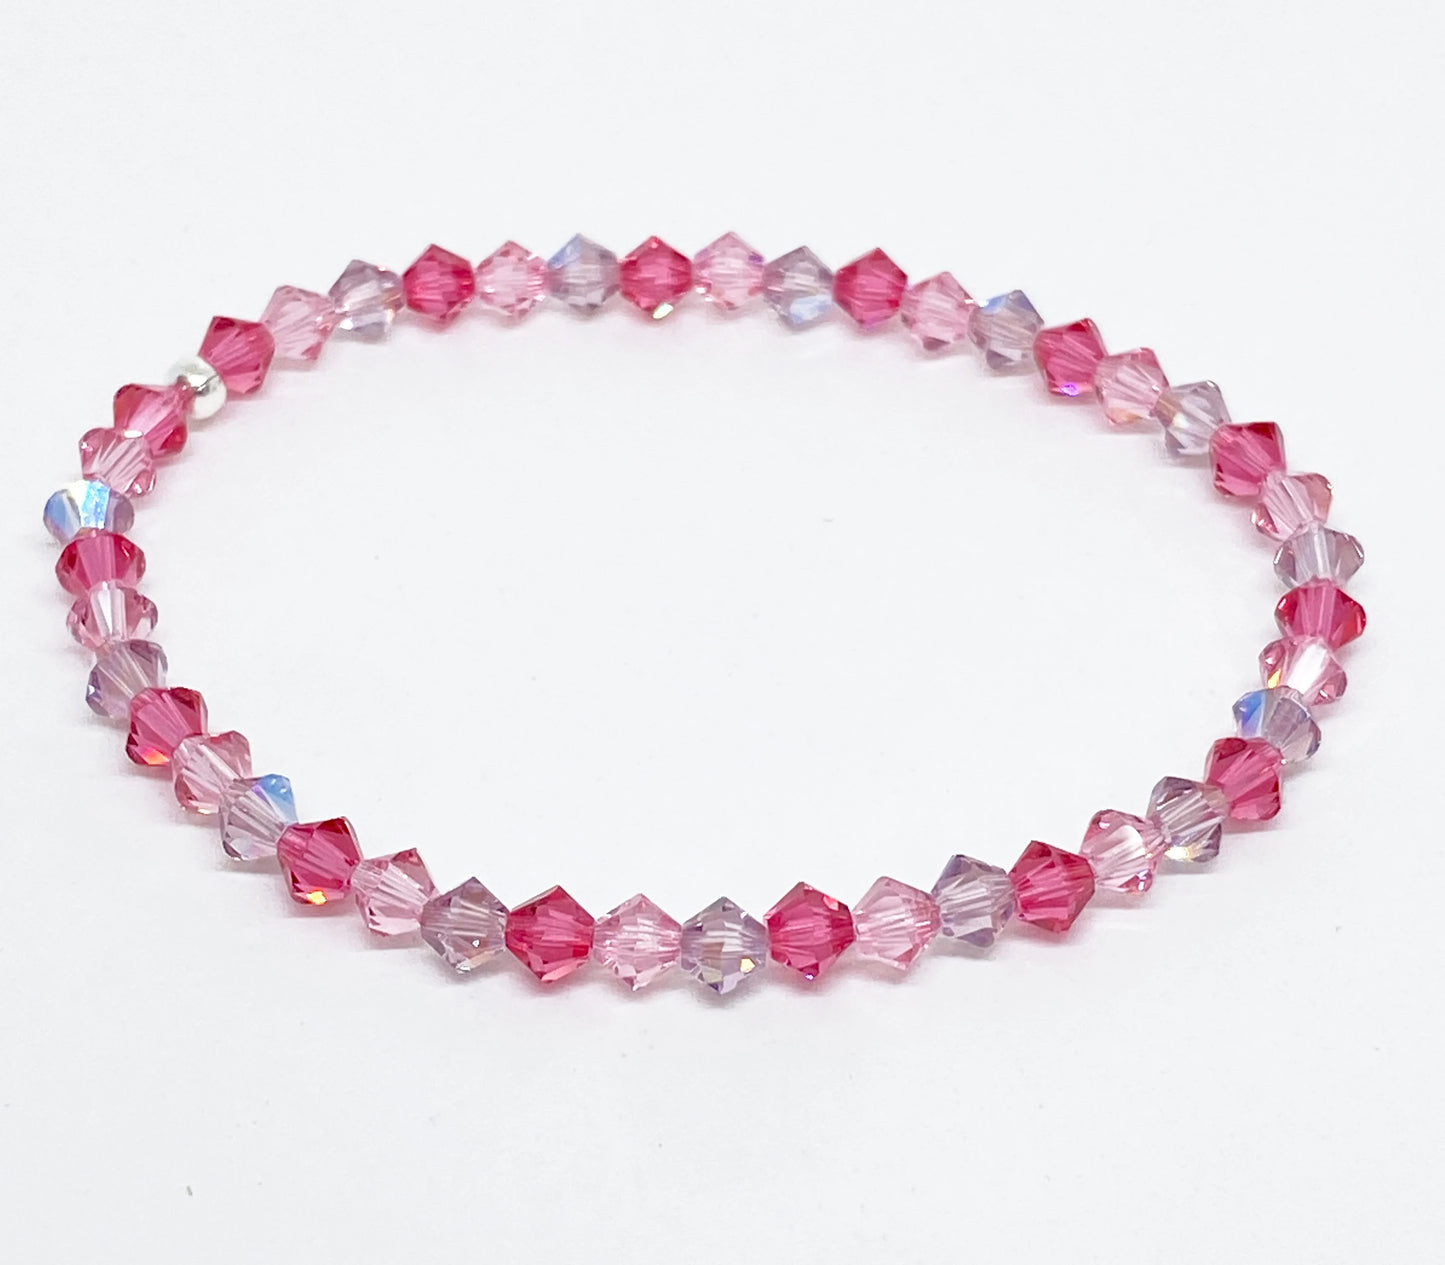 Swarovski Crystal Bracelet in Candy Heart - with Indian Pink, Light Rose, and Light Amethyst Shimmer Swarovski Crystals